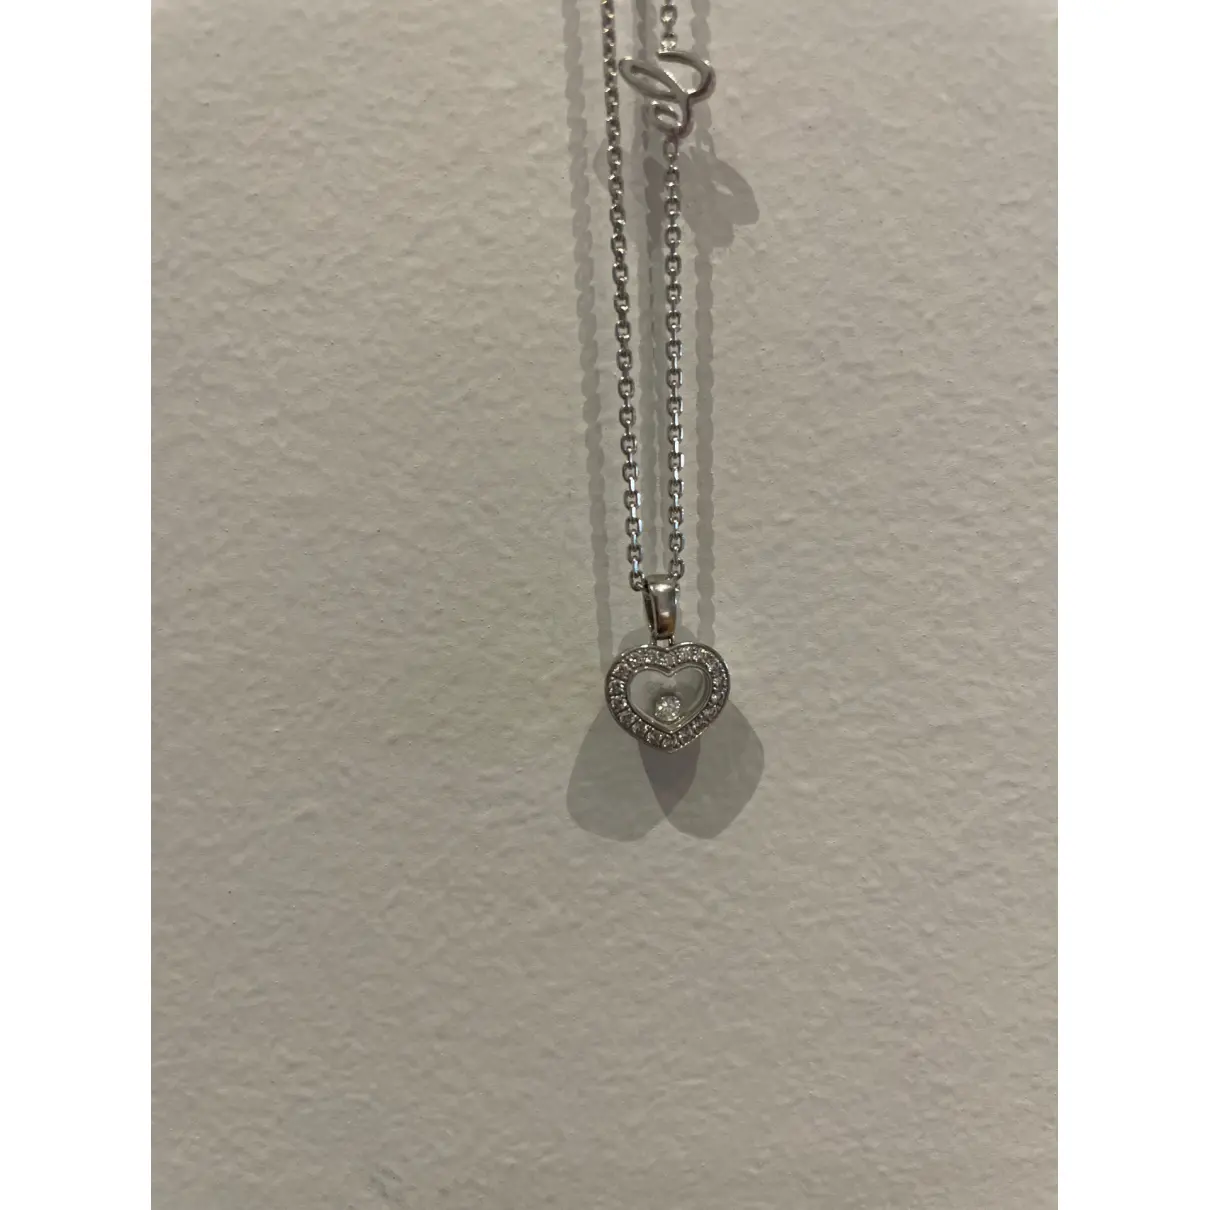 Buy Chopard Happy Diamonds white gold necklace online